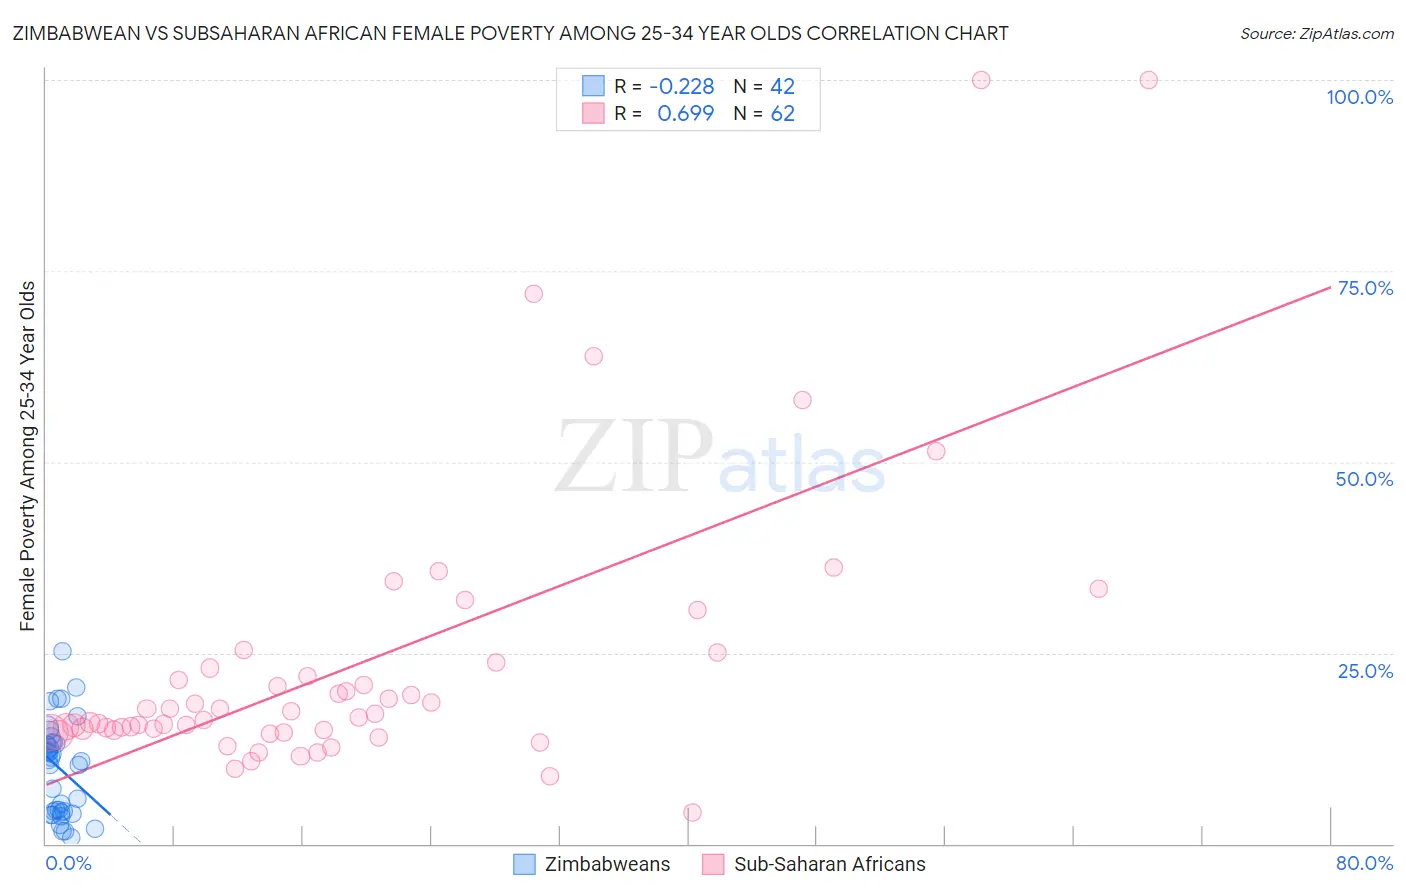 Zimbabwean vs Subsaharan African Female Poverty Among 25-34 Year Olds